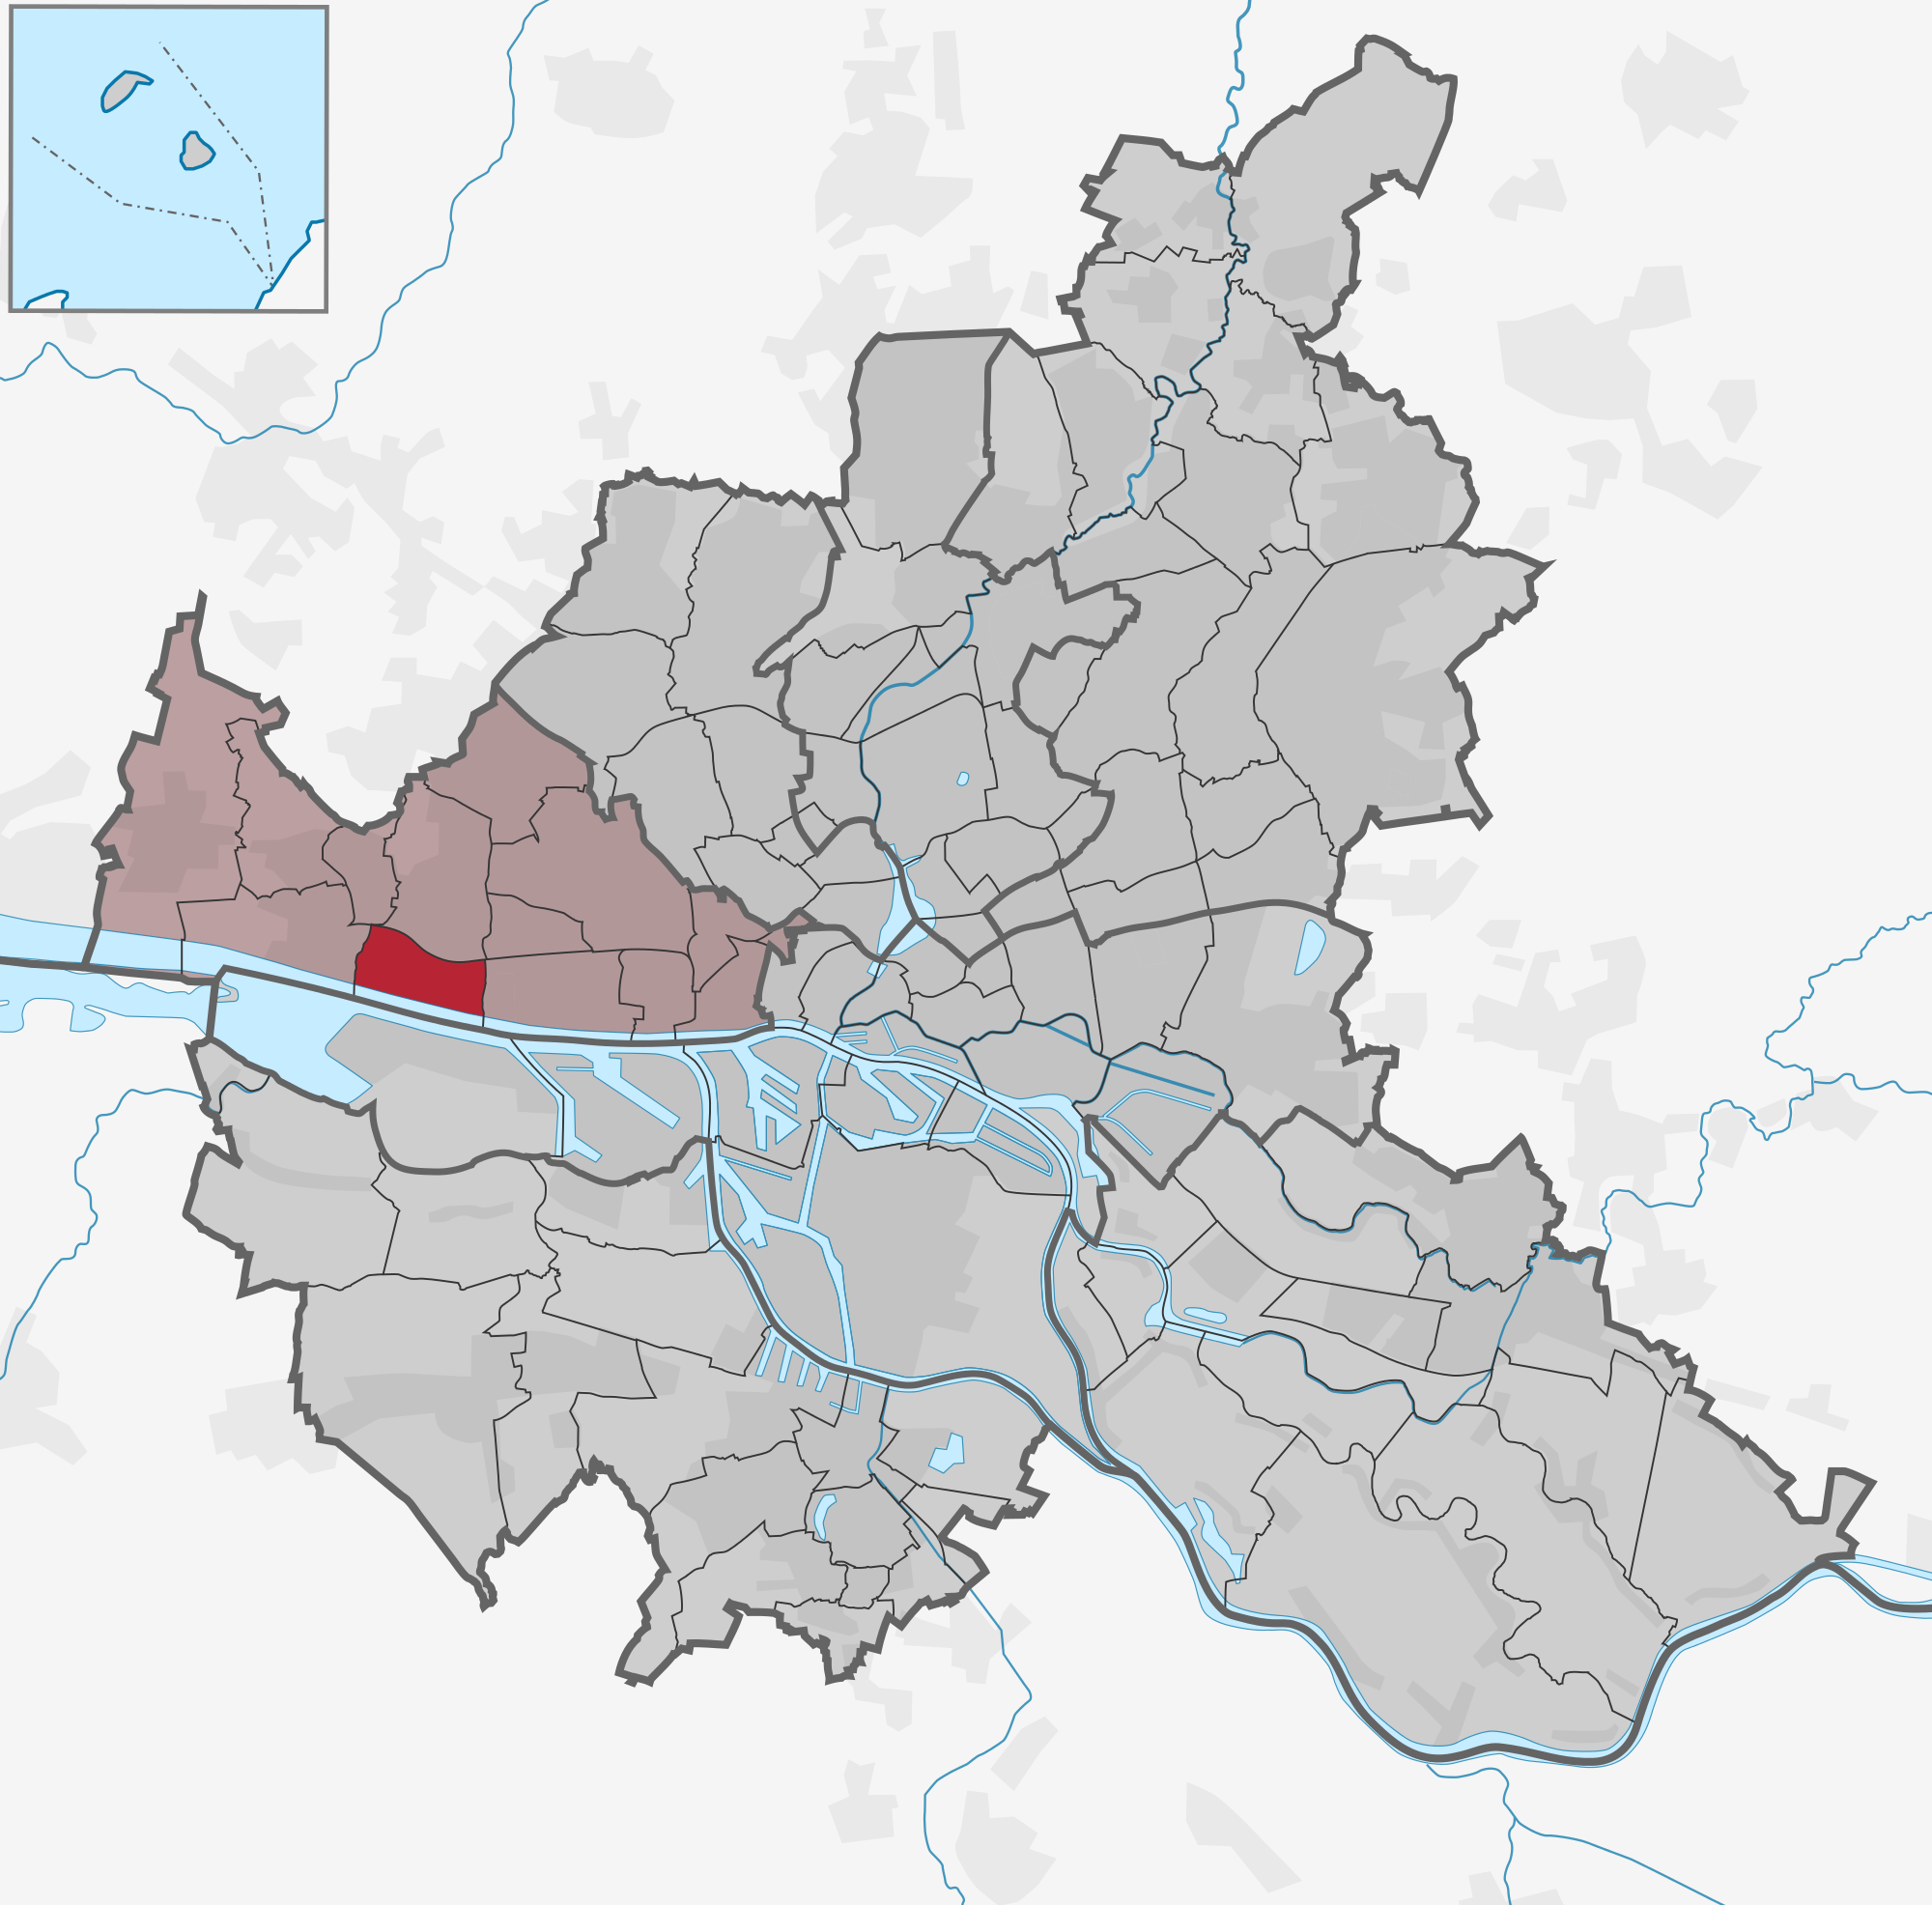 Stadtteil Nienstedten (Bezirk Altona)